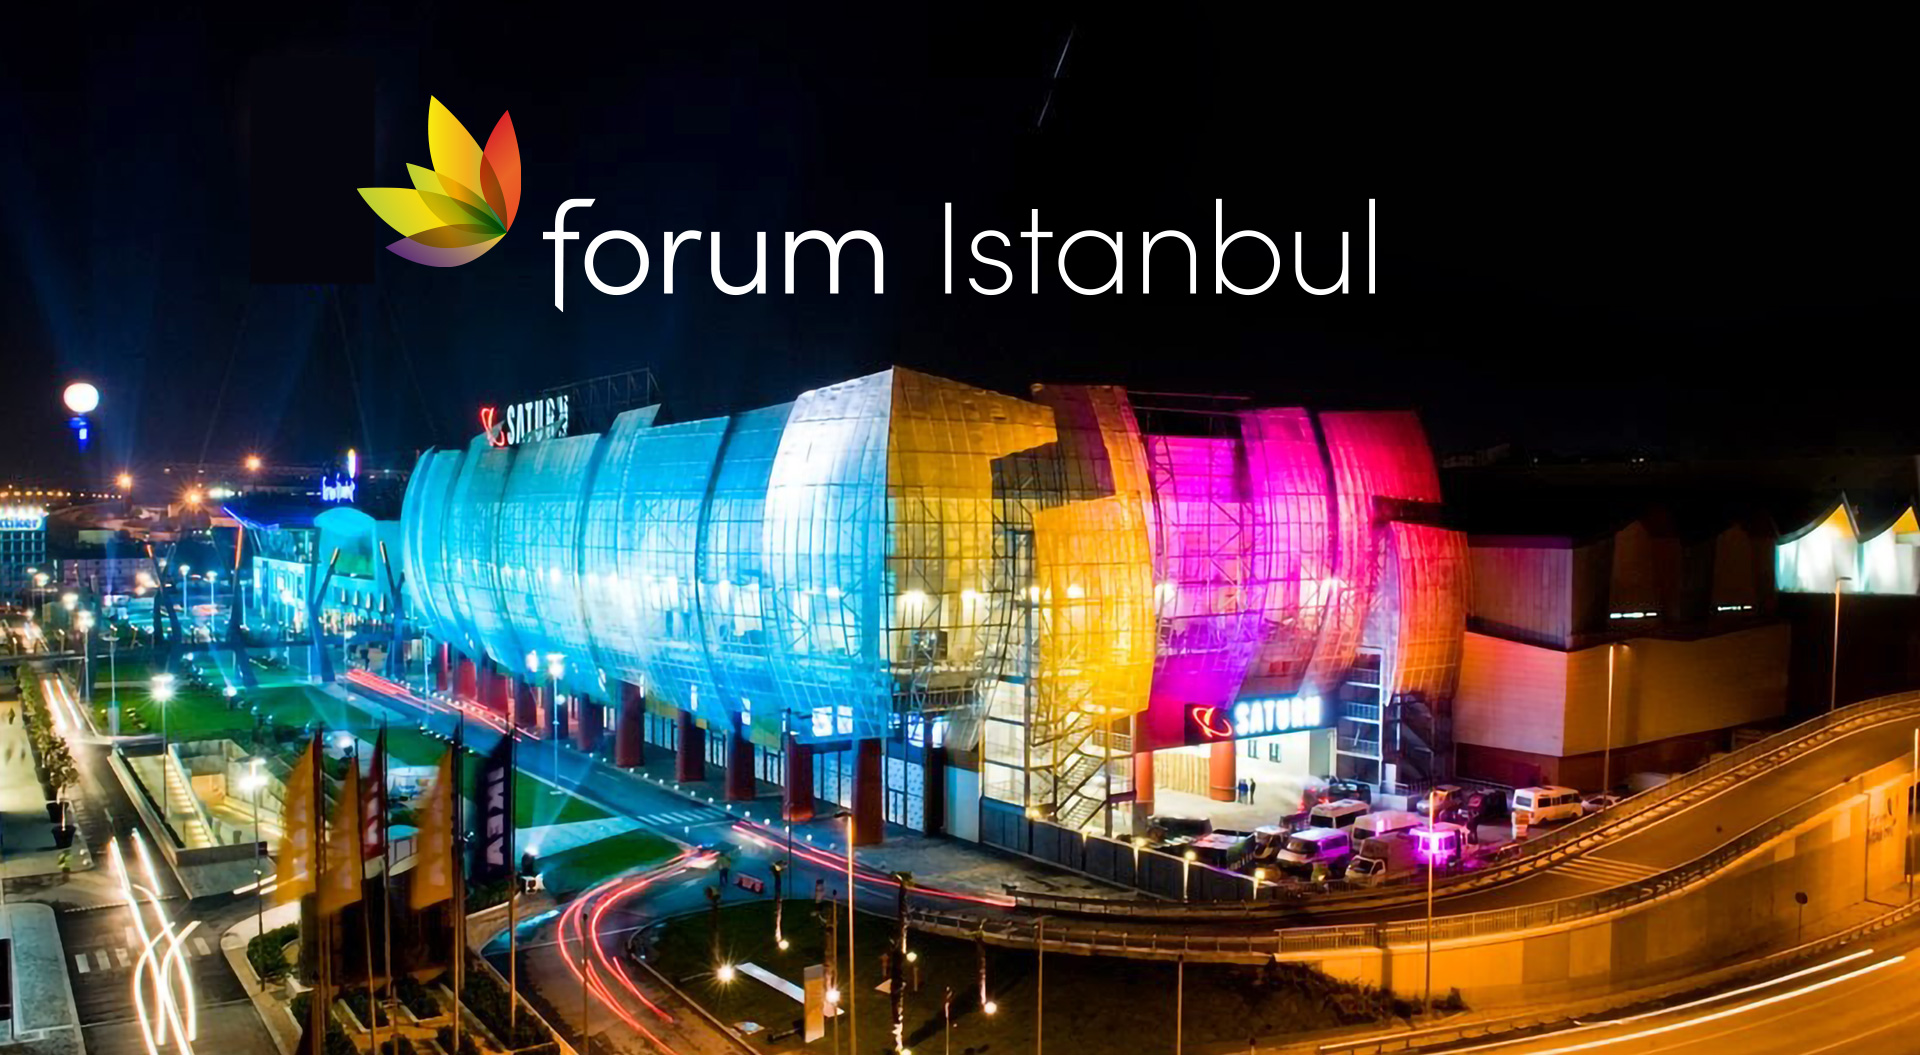 Forum Istanbul Shopping Mall rebranding